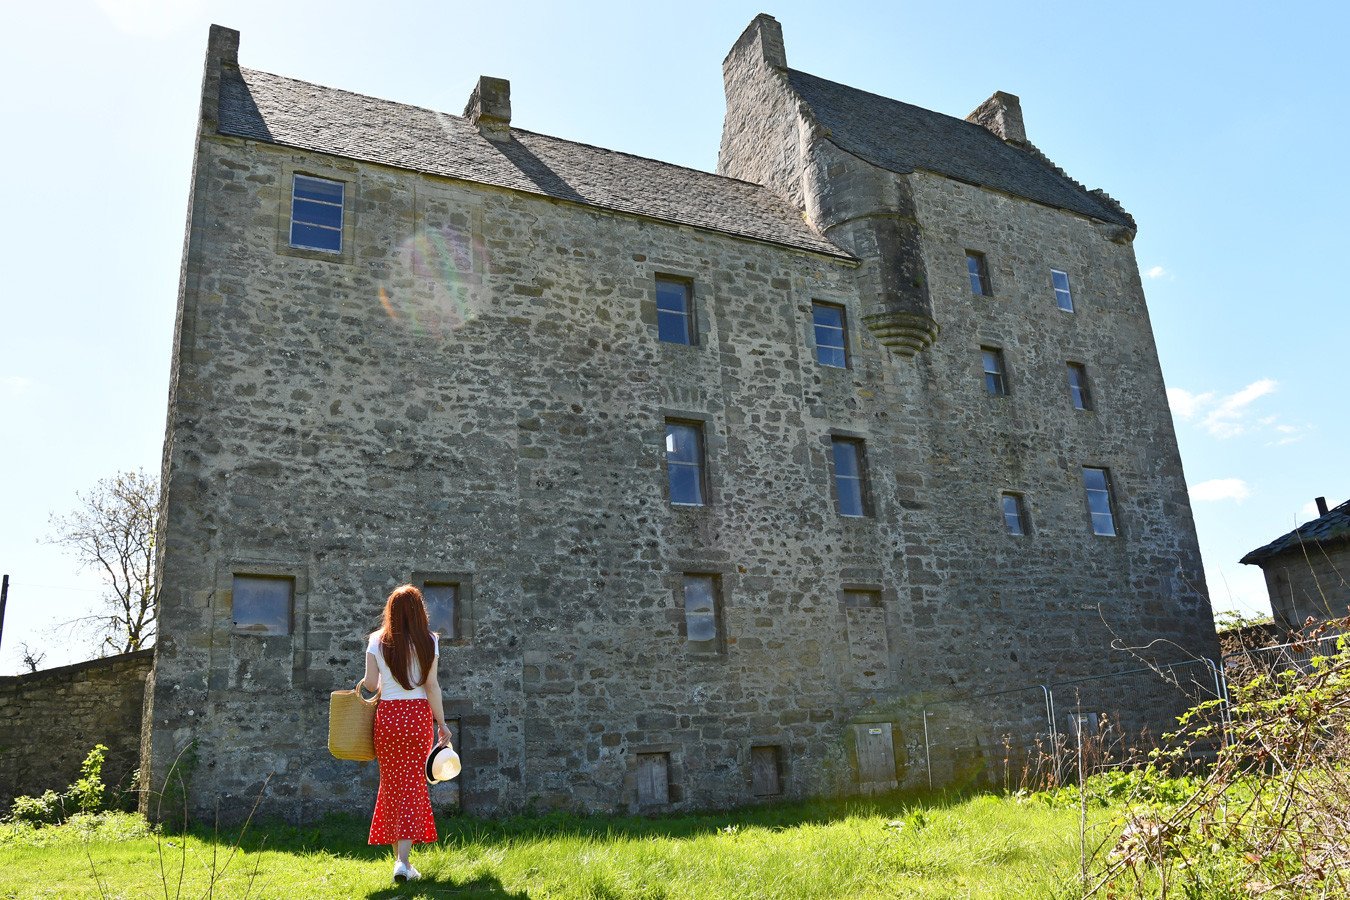 Lallybroch - a.k.a Midhope Castle - an Outlander filming location in Scotland